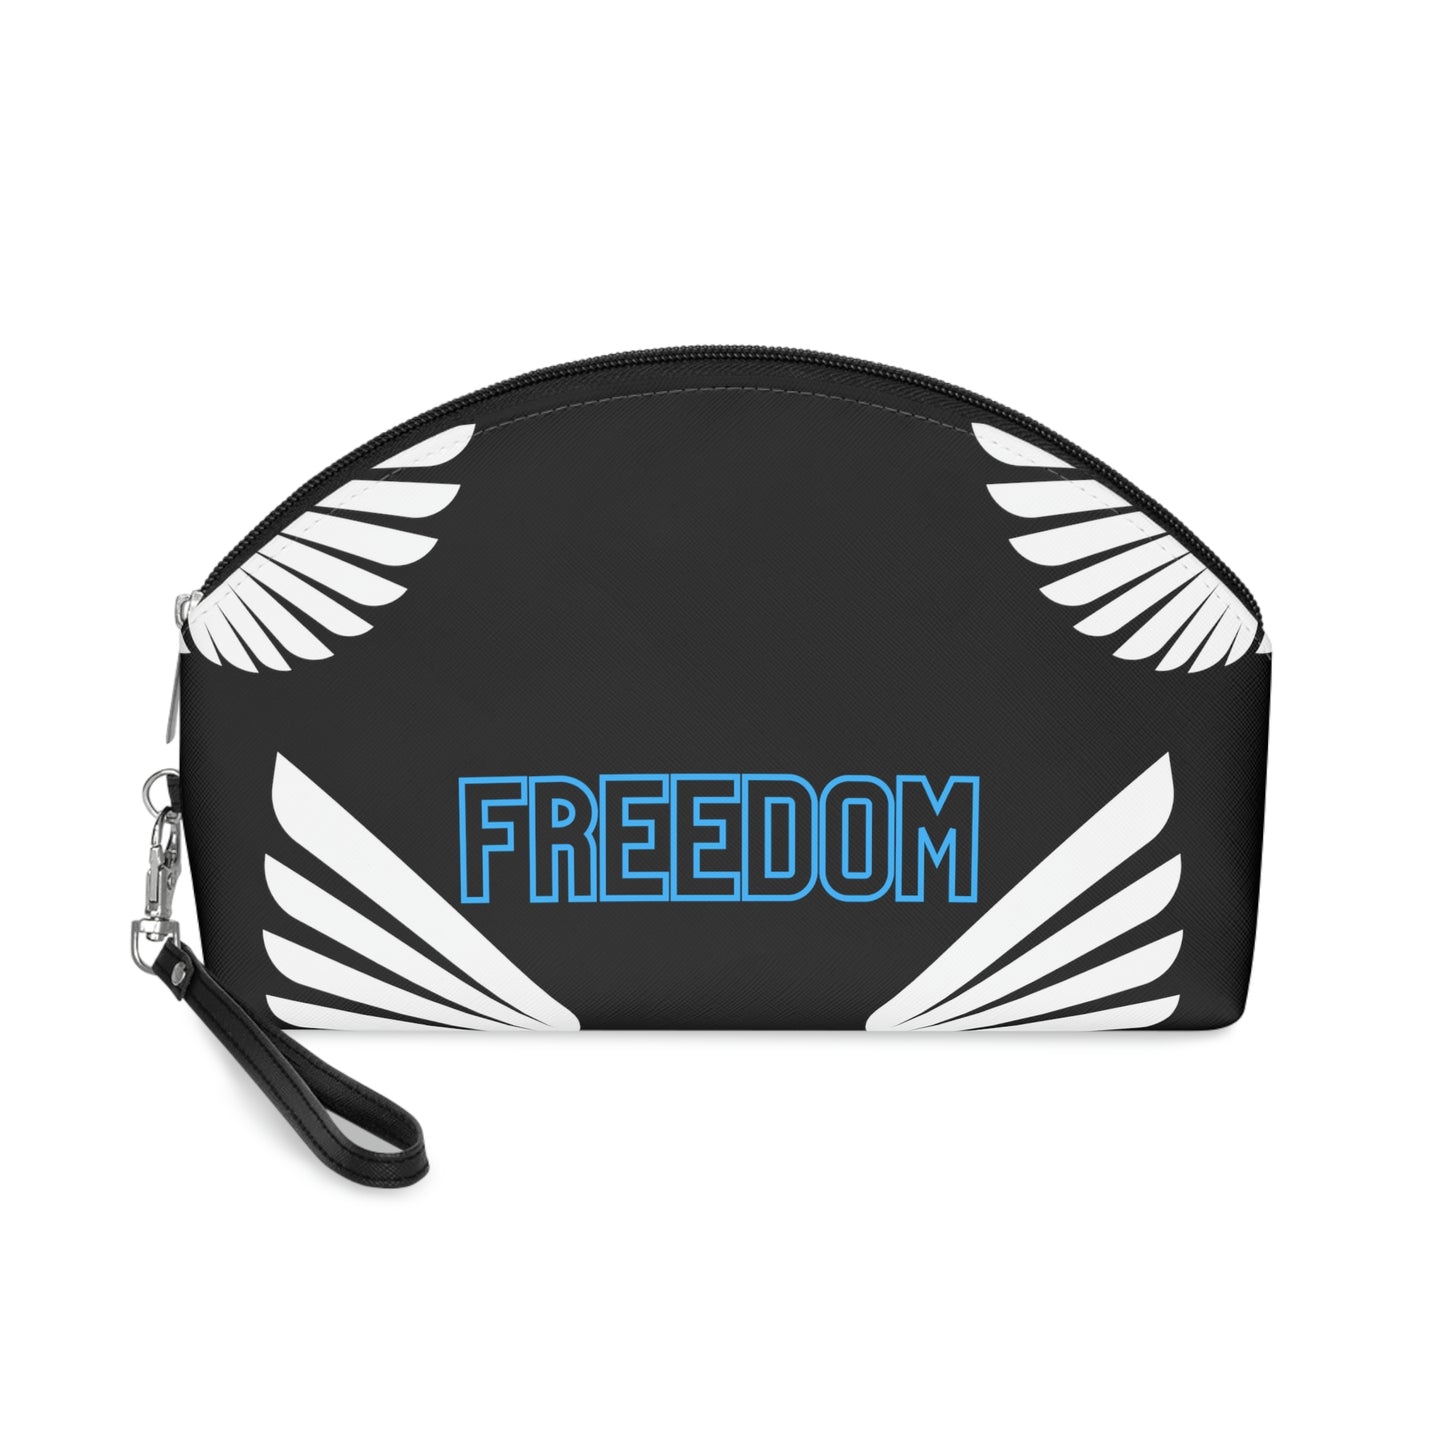 Fly Freedom Makeup Bag